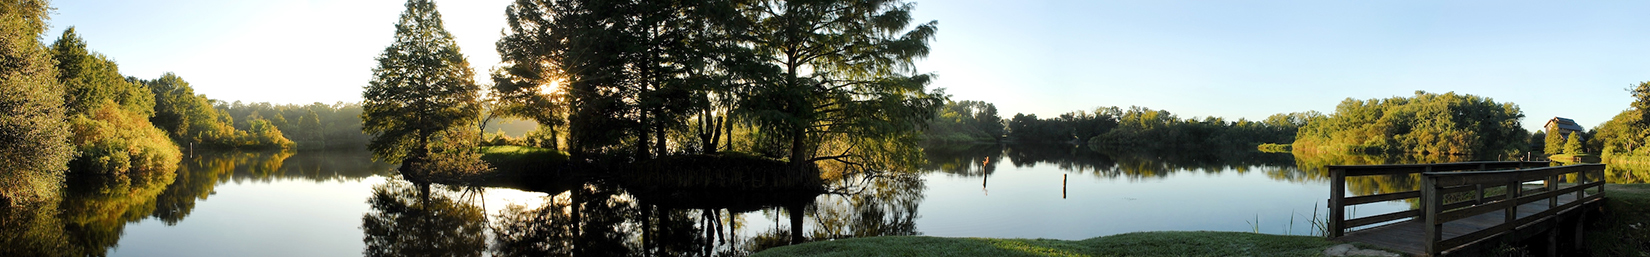 Lake Alice on the UF campus, Gainesville, Florida